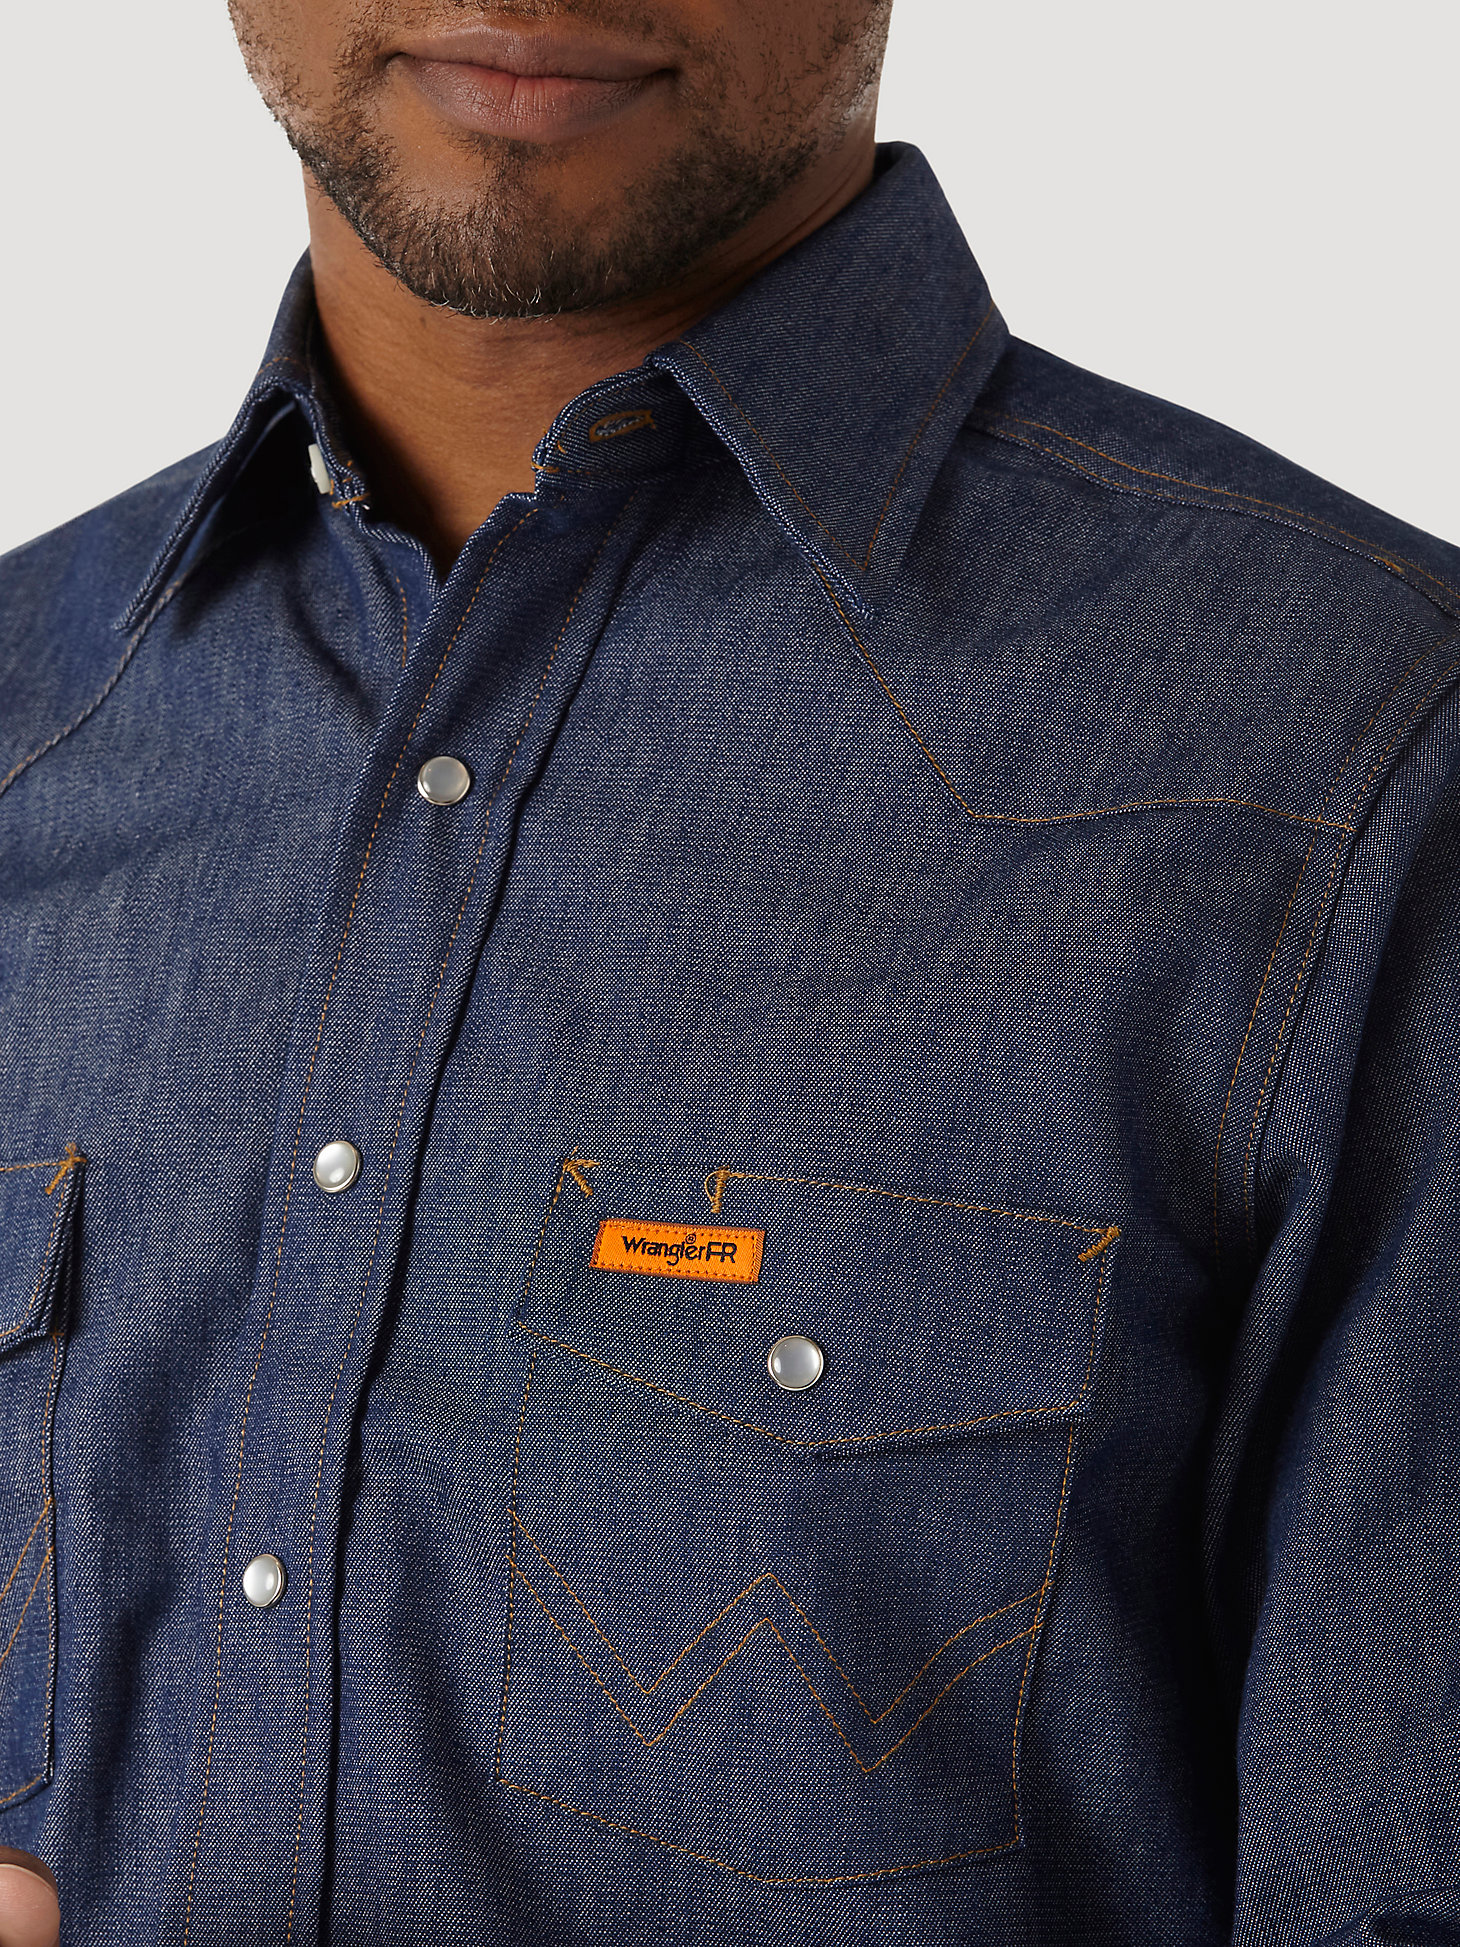 Wrangler® FR Flame Resistant Long Sleeve Denim Work Shirt in Denim alternative view 2